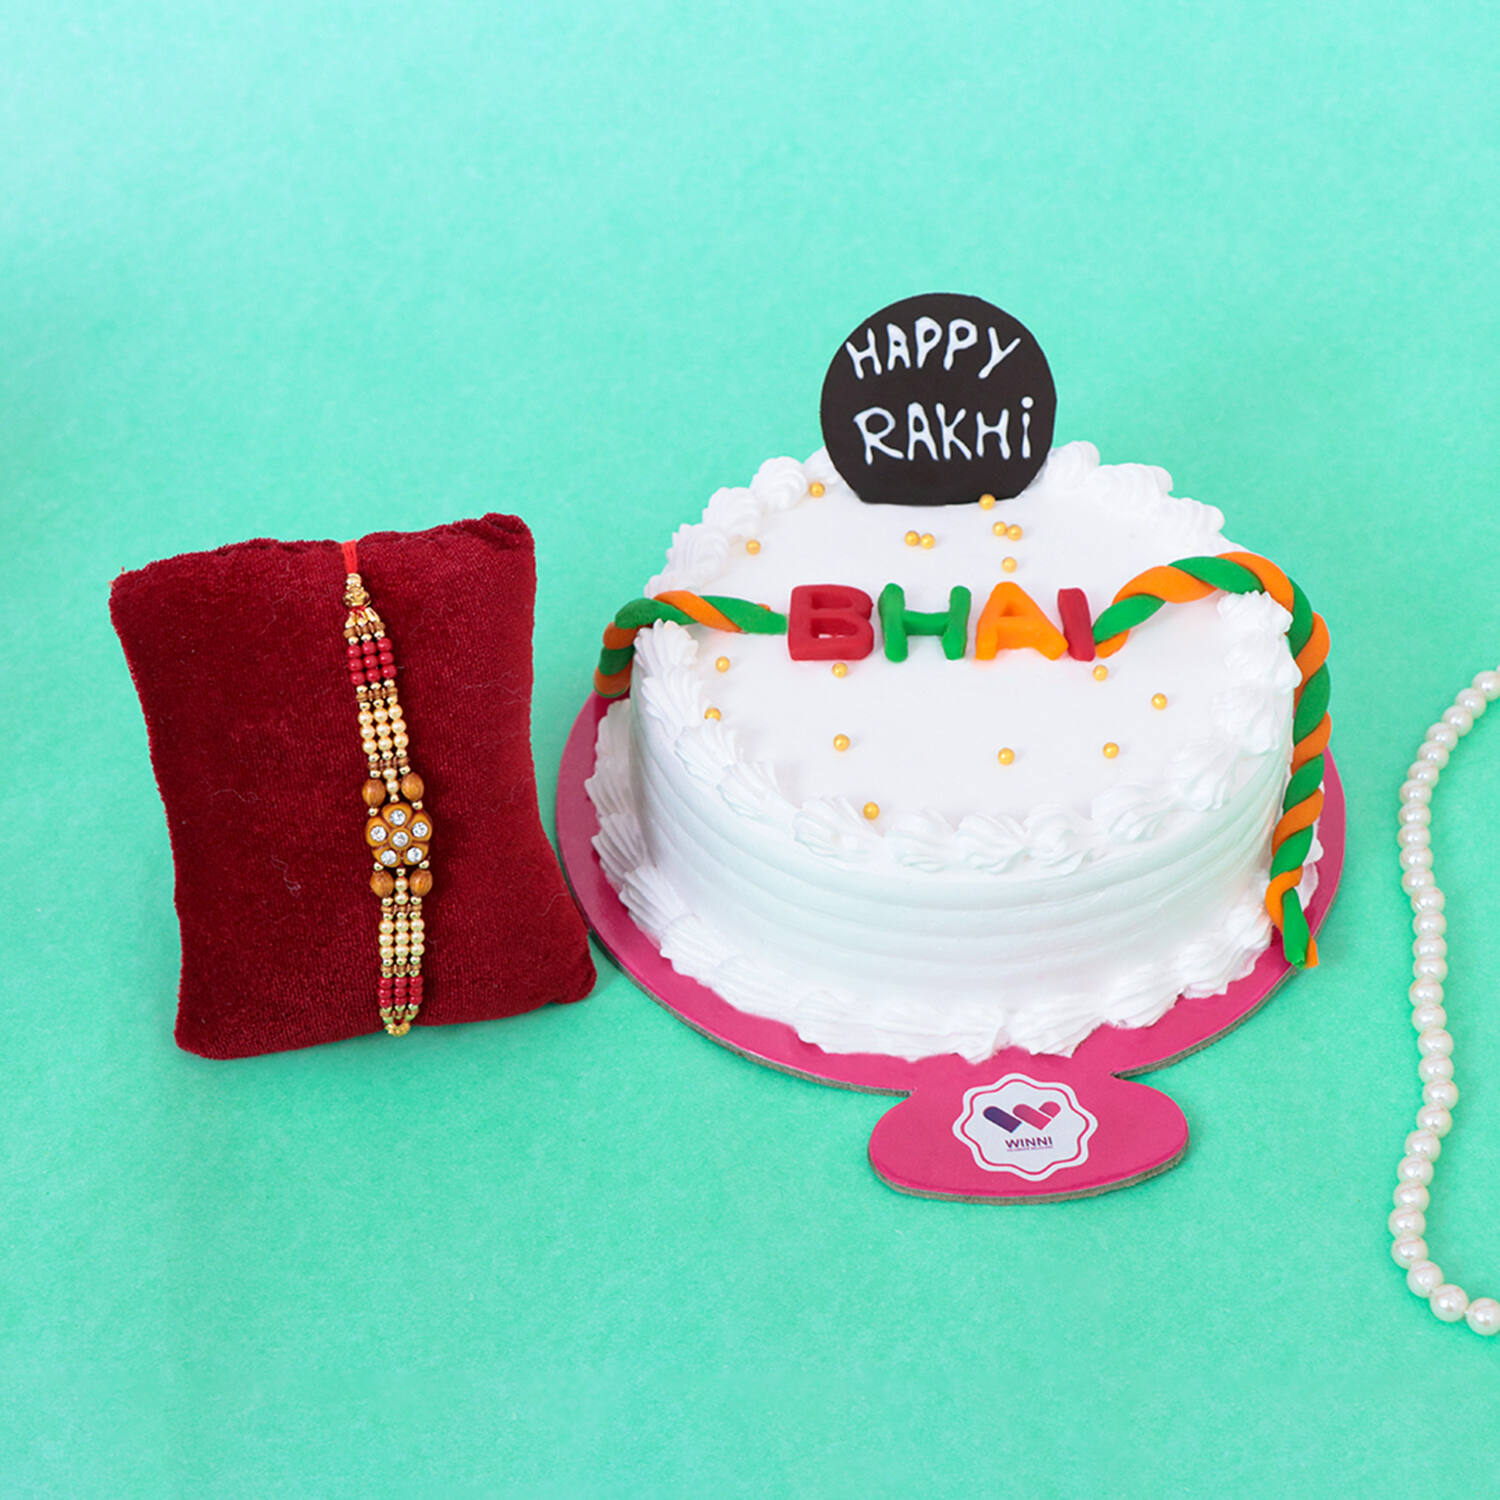 Raksha Bandhan Wishes Cake Eggless Half Kg : Gift/Send Rakhi Gifts Online  HD1114247 el |IGP.com